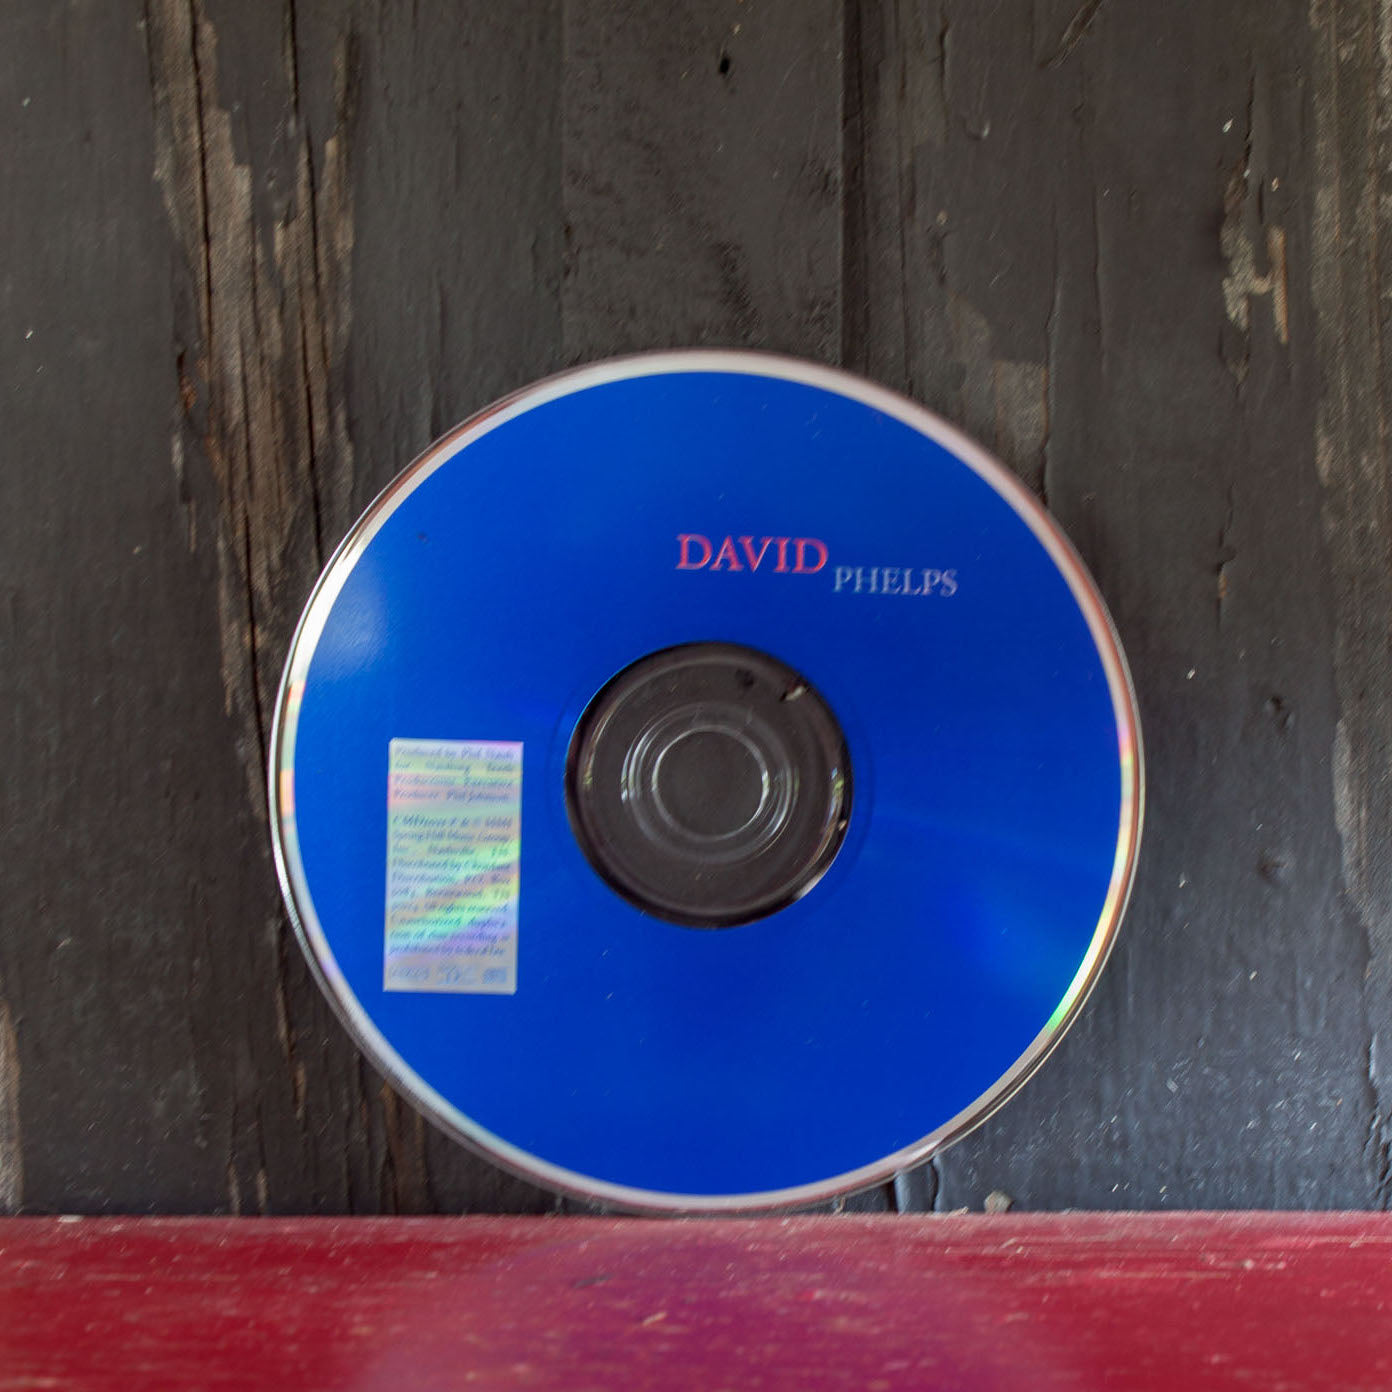 David Phelps CD